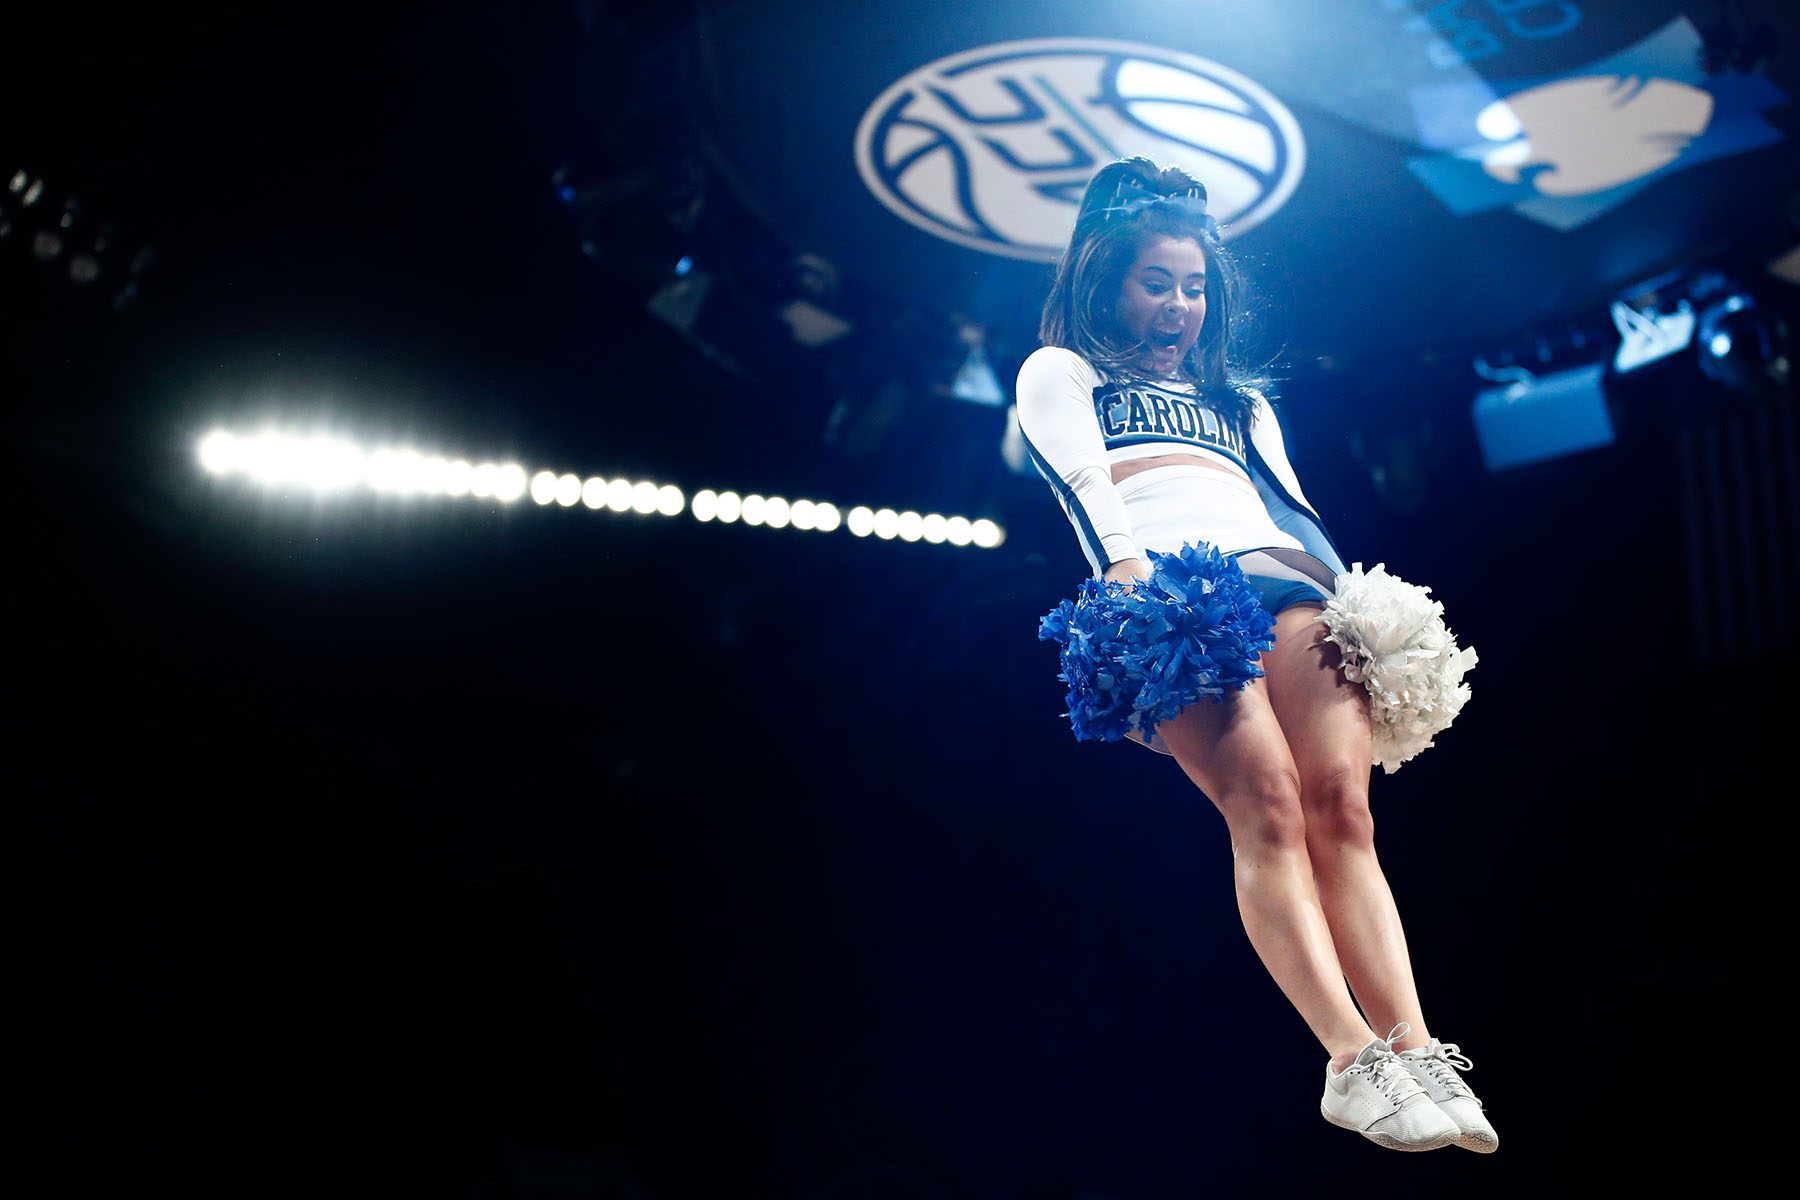 A North Carolina Tar Heels cheerleader is thrown into the air while performing.